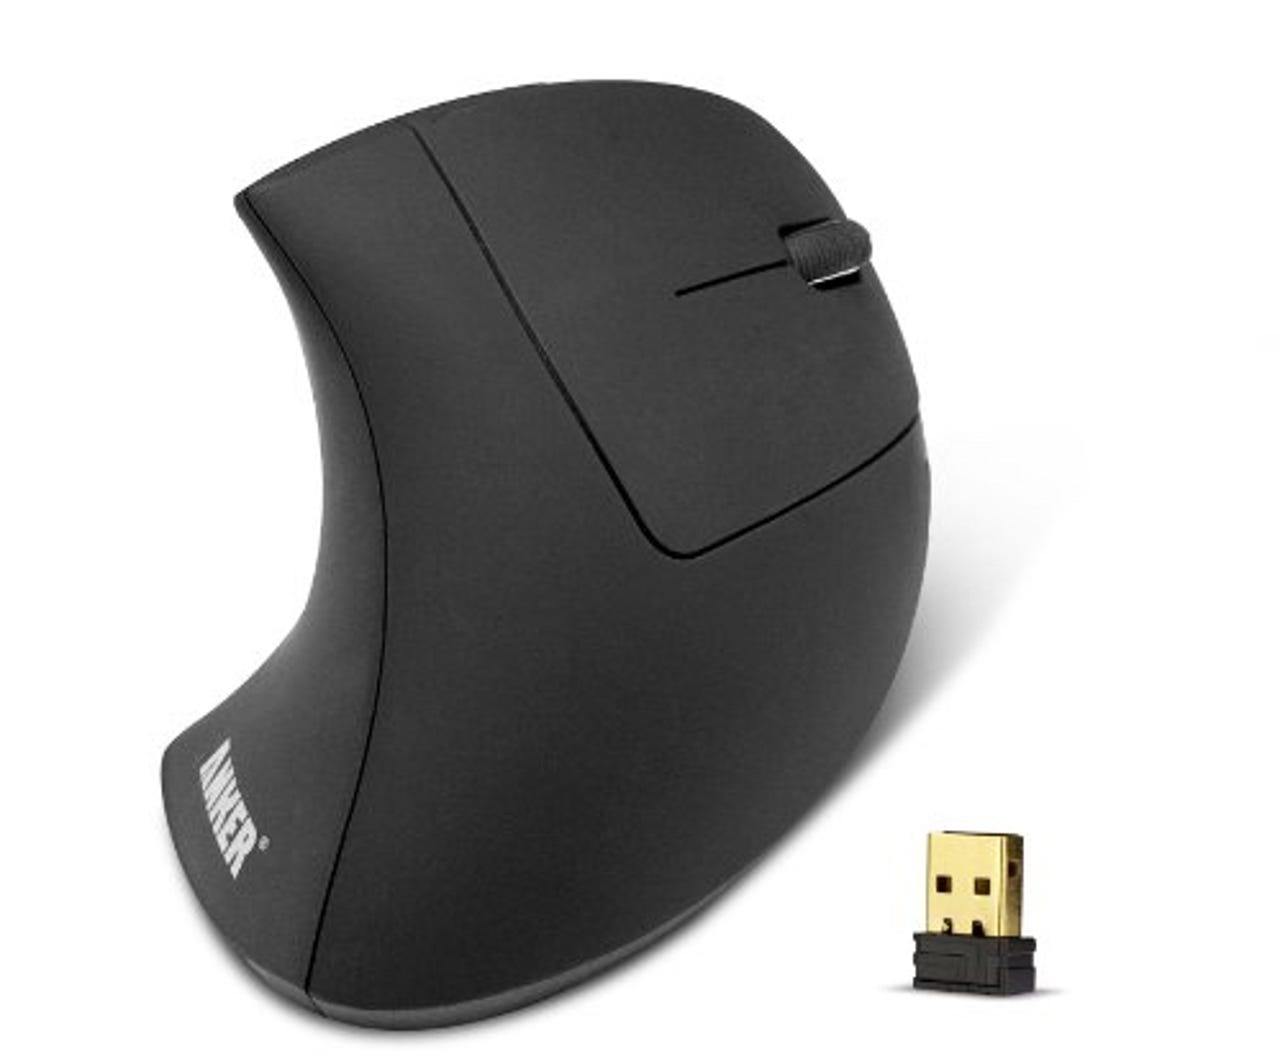 amazon-com-ankerr-2-4g-wireless-vertical-ergonomic-optical-mouse-800-1200-1600dpi-5-buttons-black-computers-accessor-2015-12-13-16-11-05.jpg